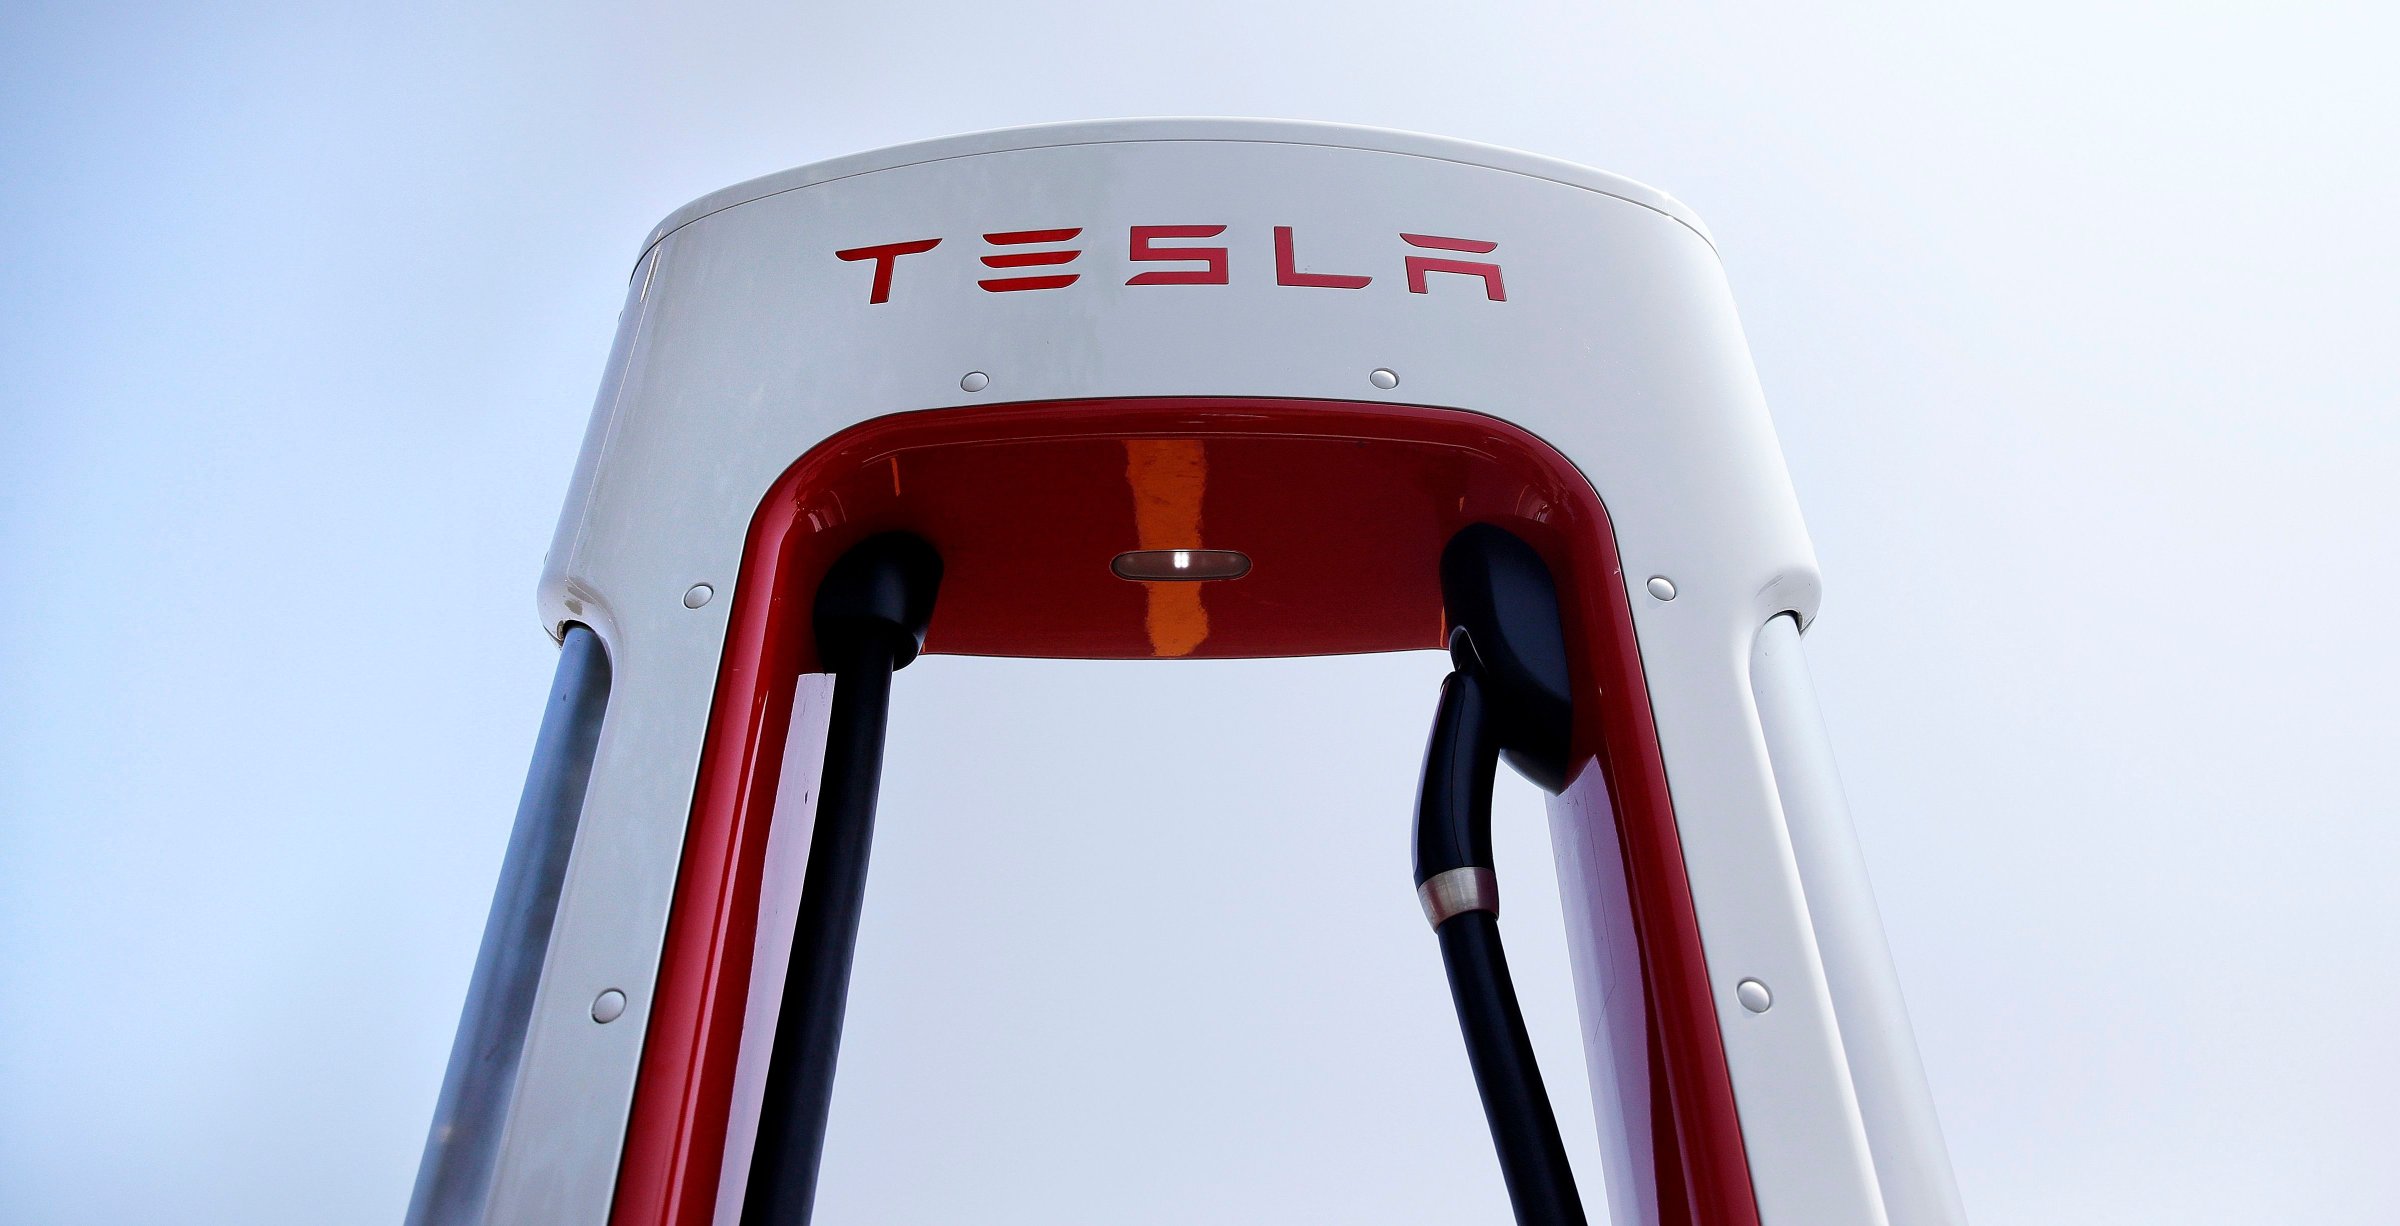 A Tesla vehicle charging station